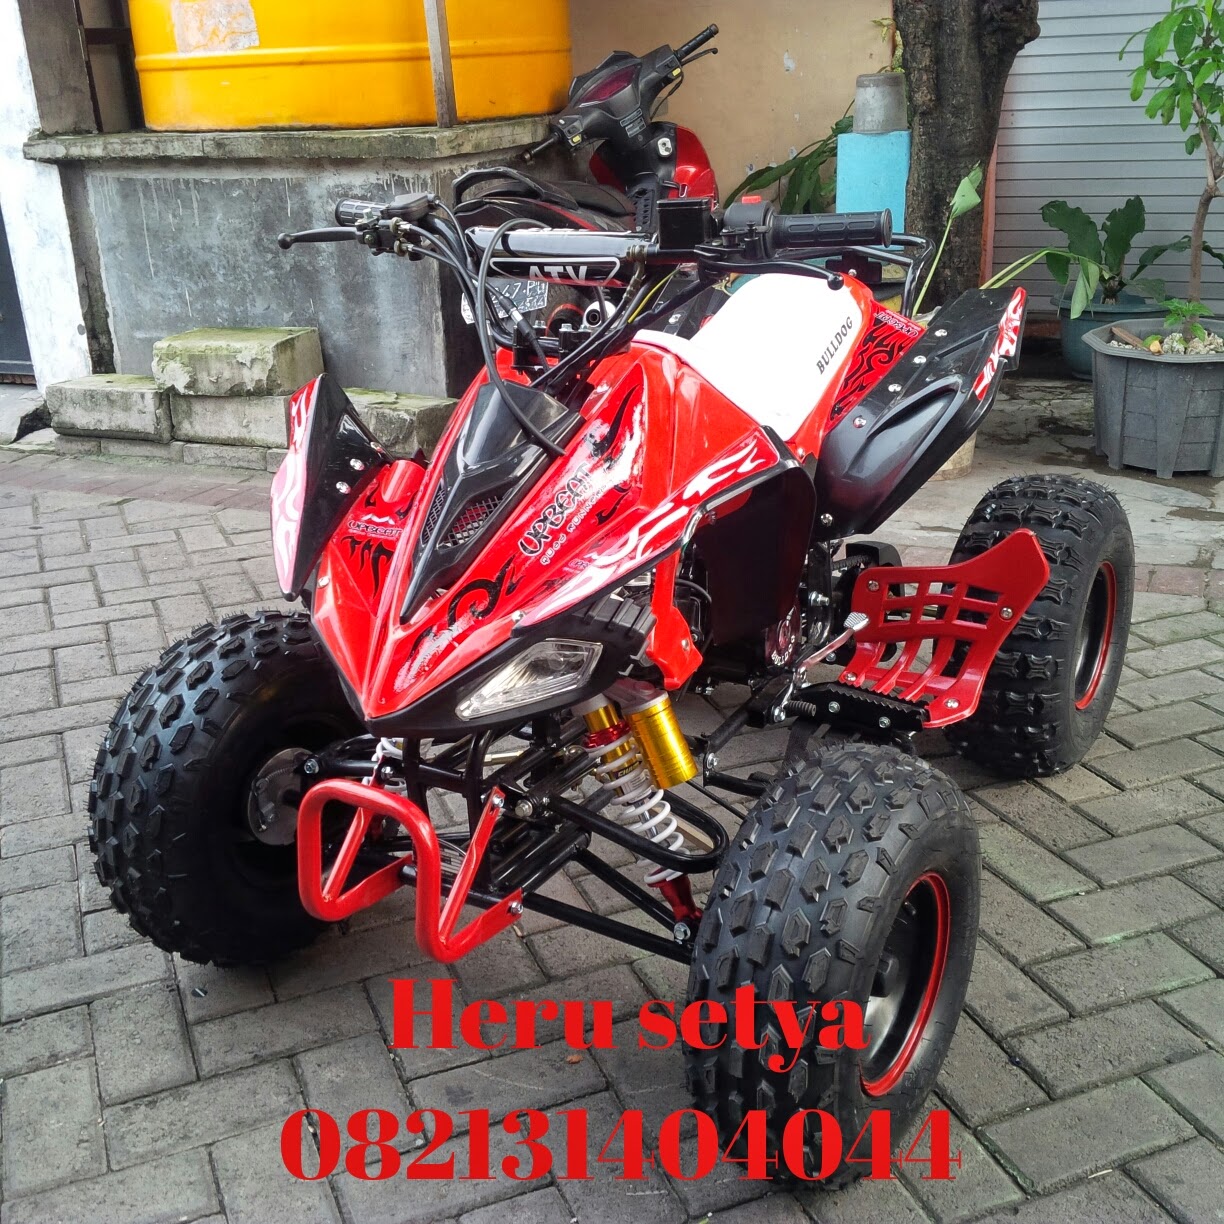 082131404044 MOTOR MINI TRAIL GP ATV SURABAYA JAKARTA